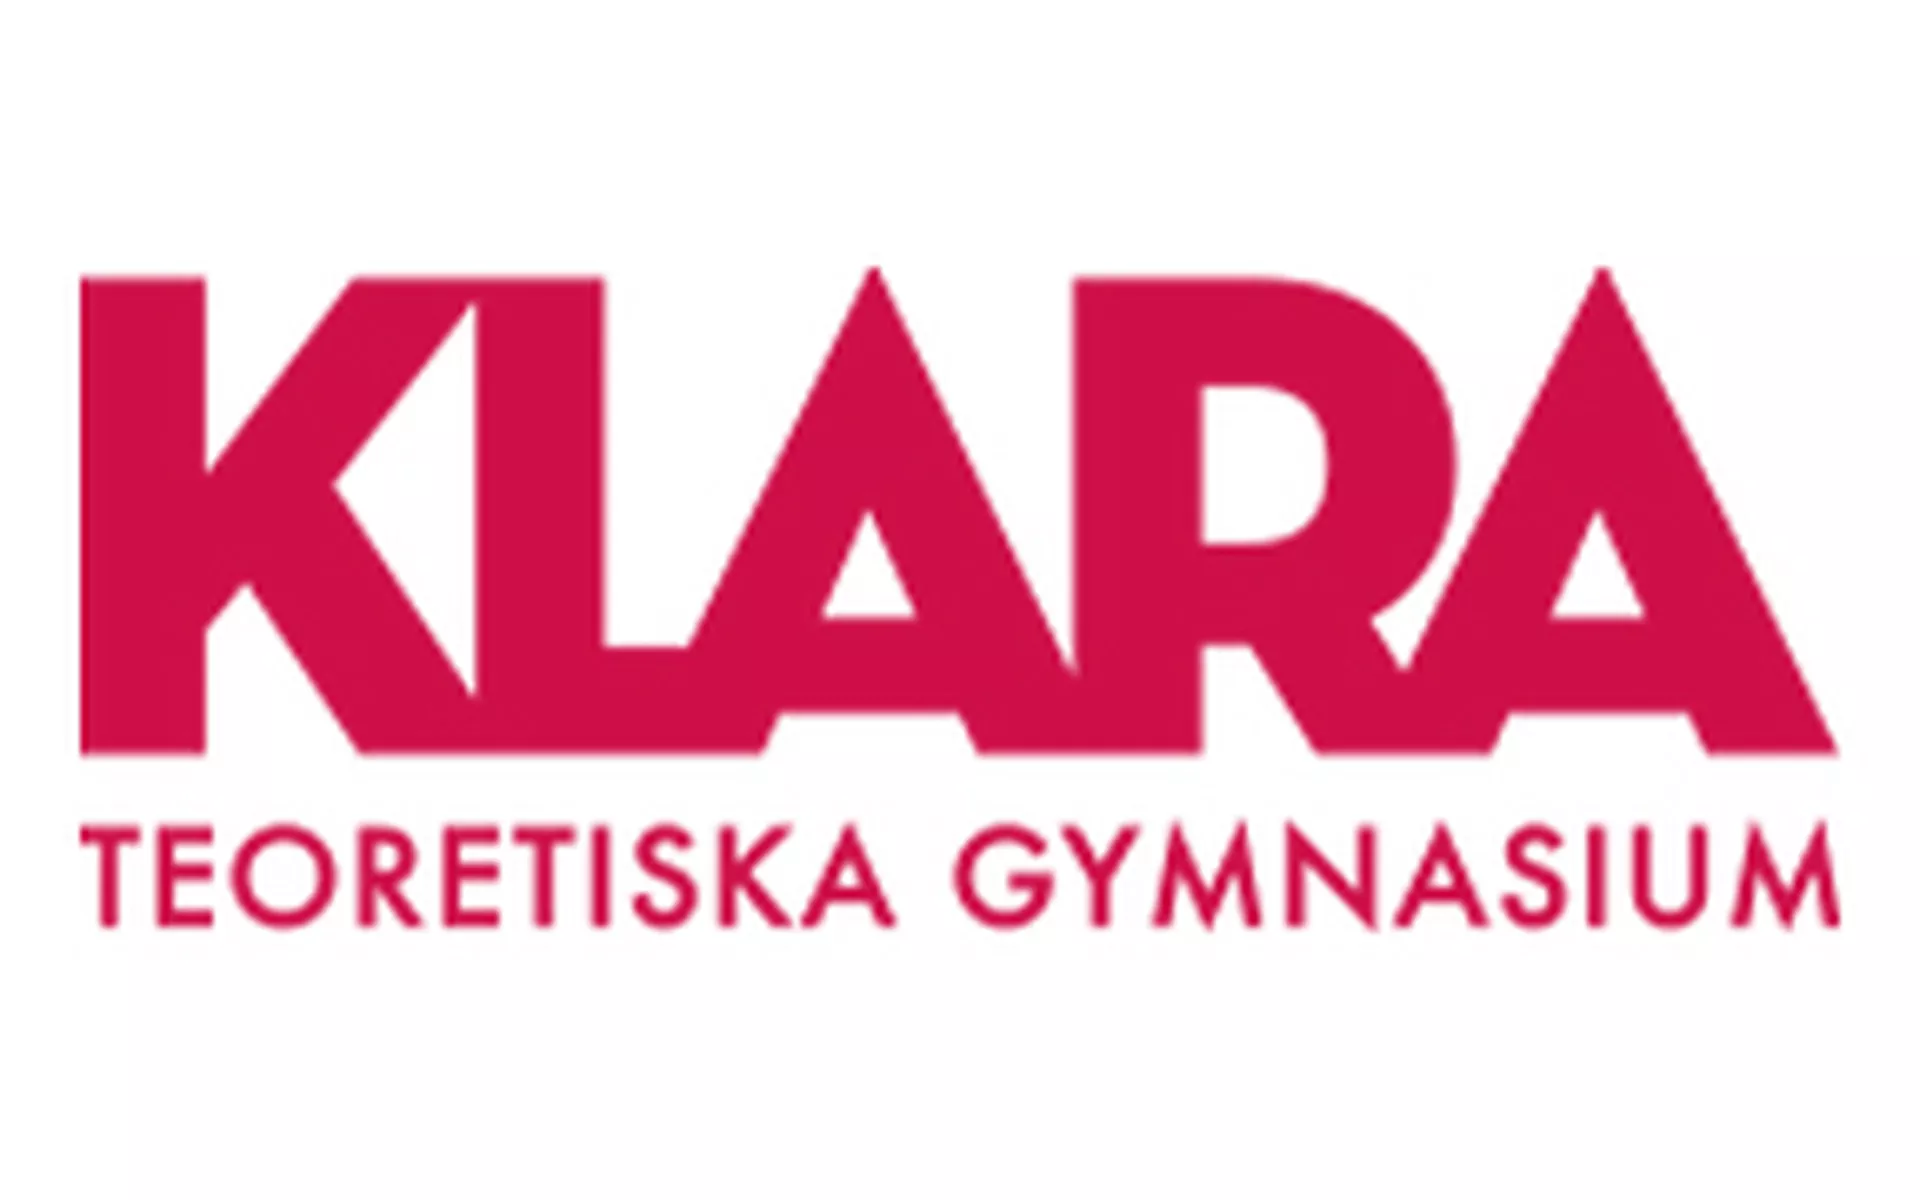 Klara Teoretiska Gymnasium Malmö